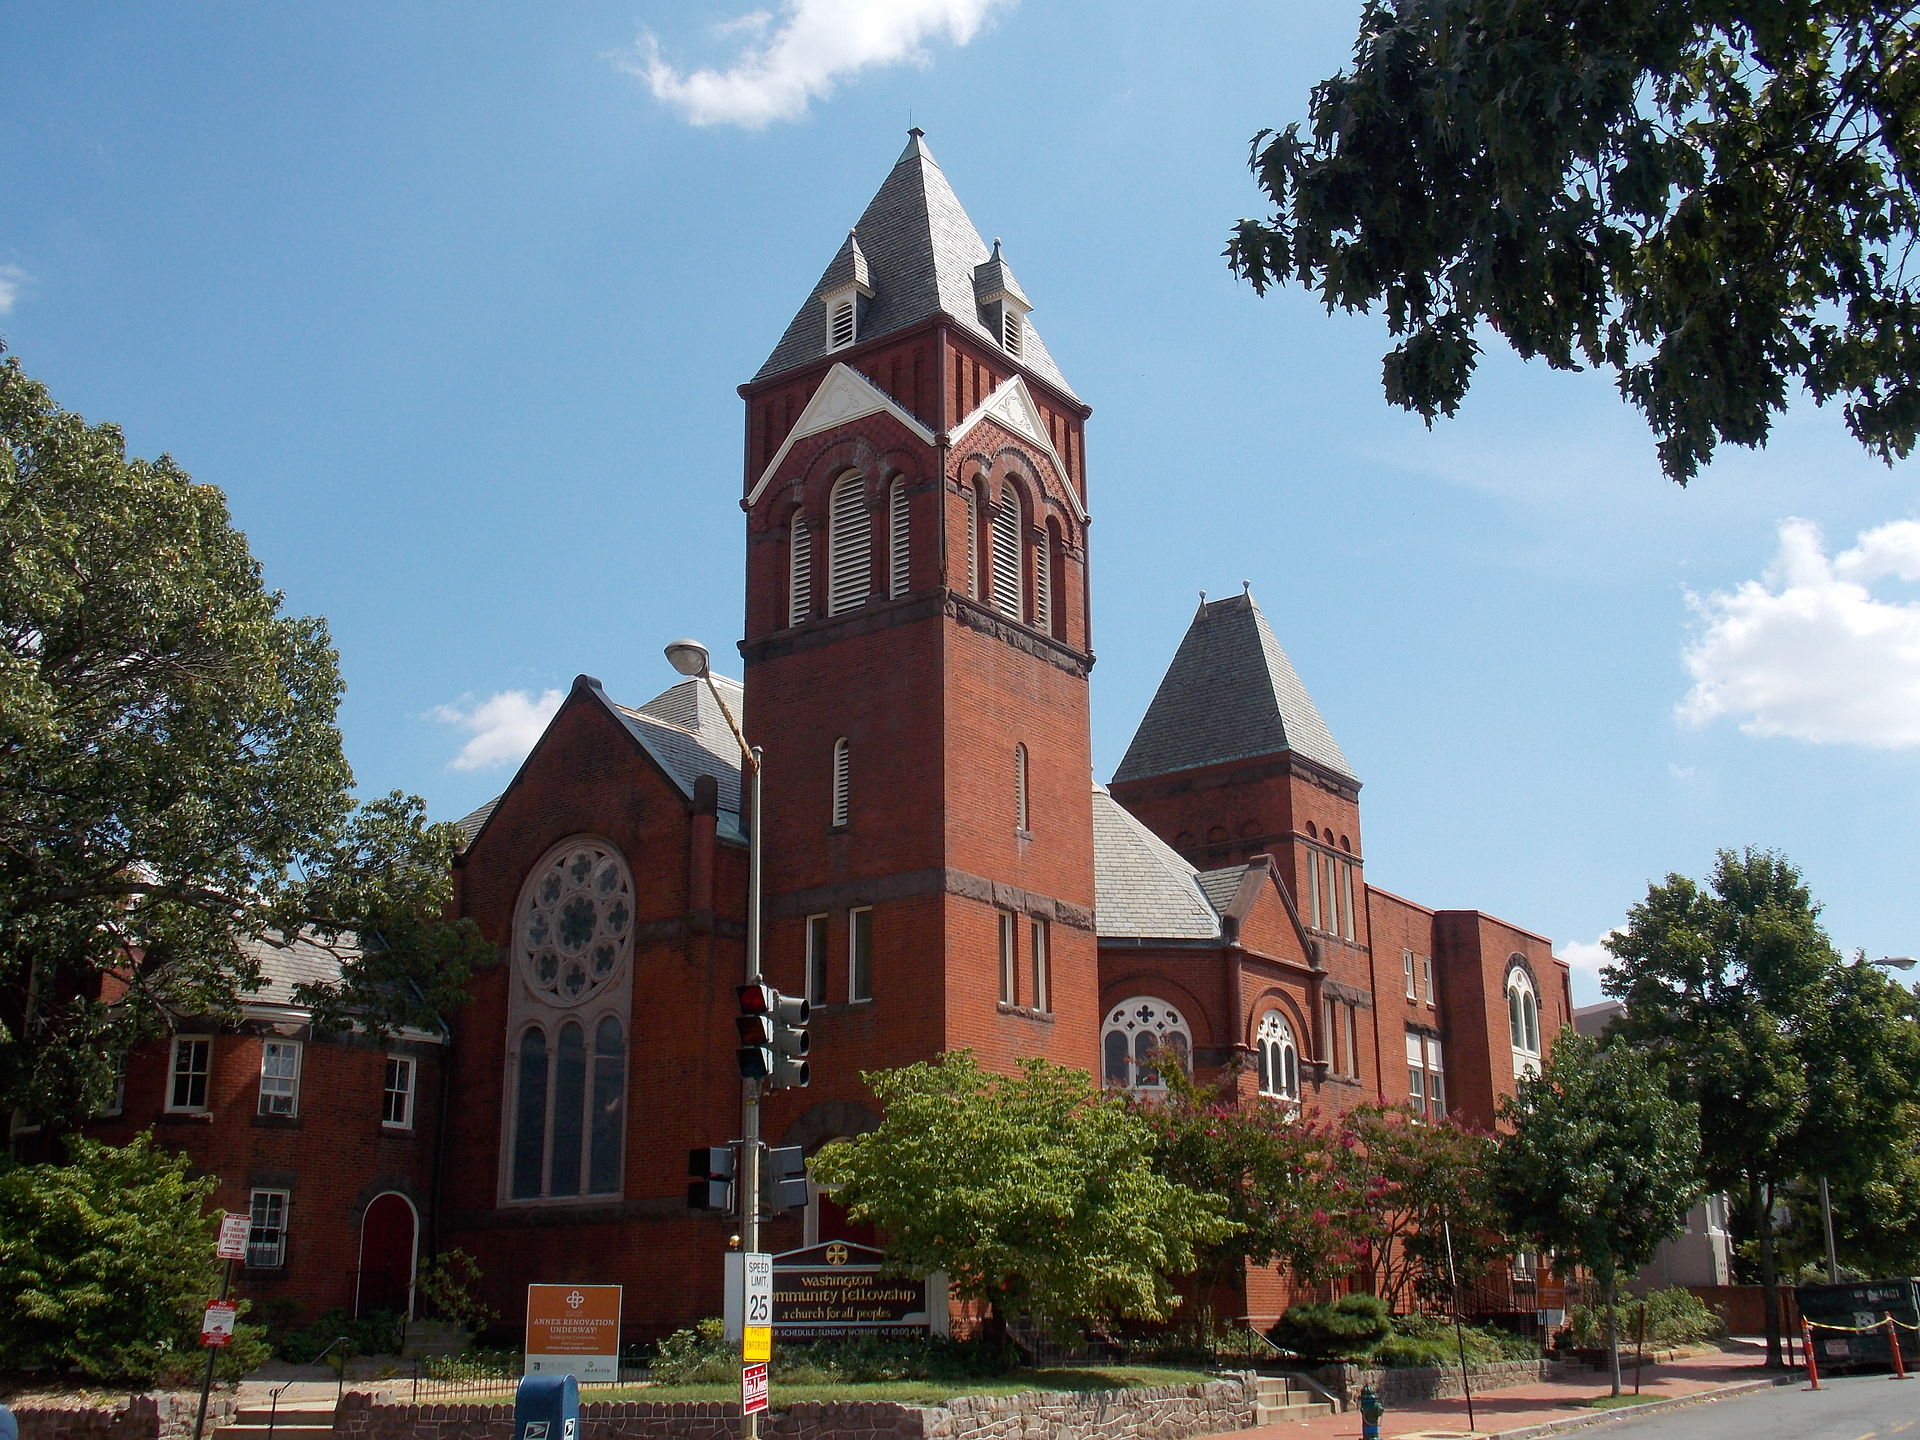 A Mennonite church in Washington, DC